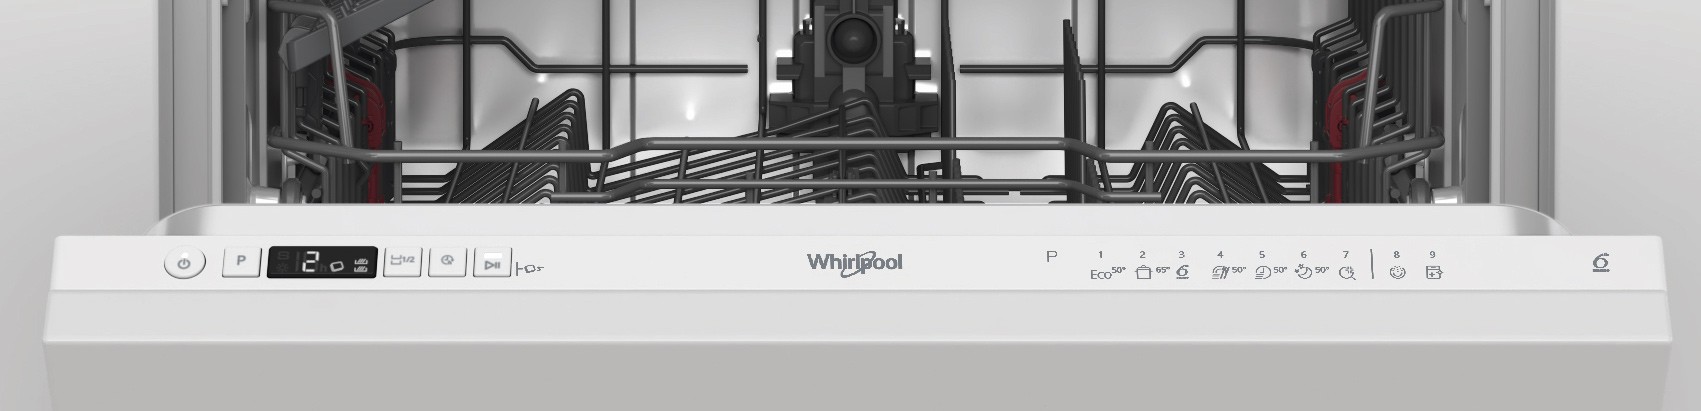 Посудомоечная машина Whirlpool W2I HD526 A цена 15299 грн - фотография 2